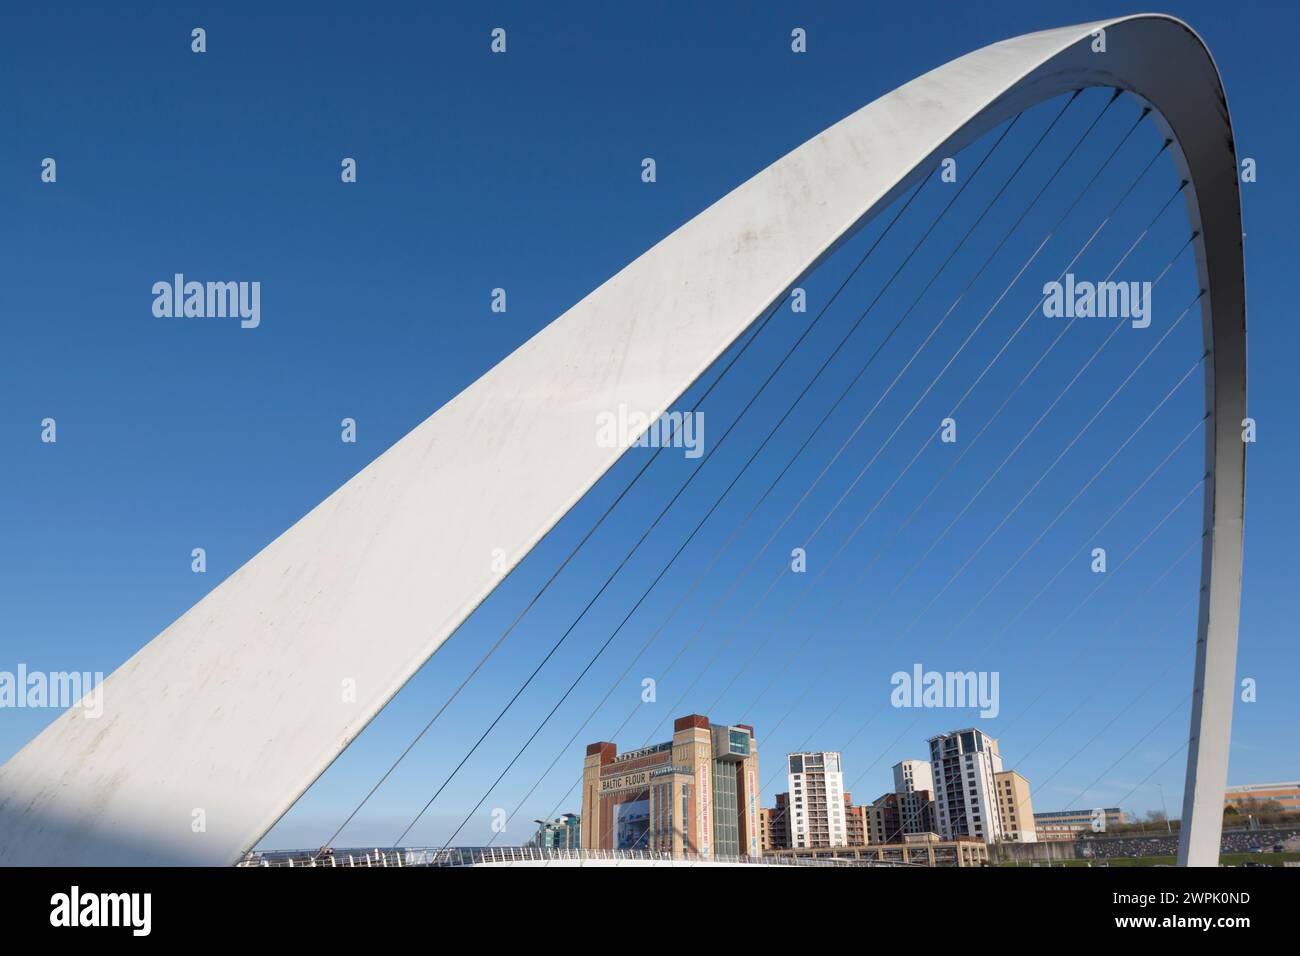 UK, Newcastle, the Gateshead Millennium bridge spanning the river Tyne. Stock Photo